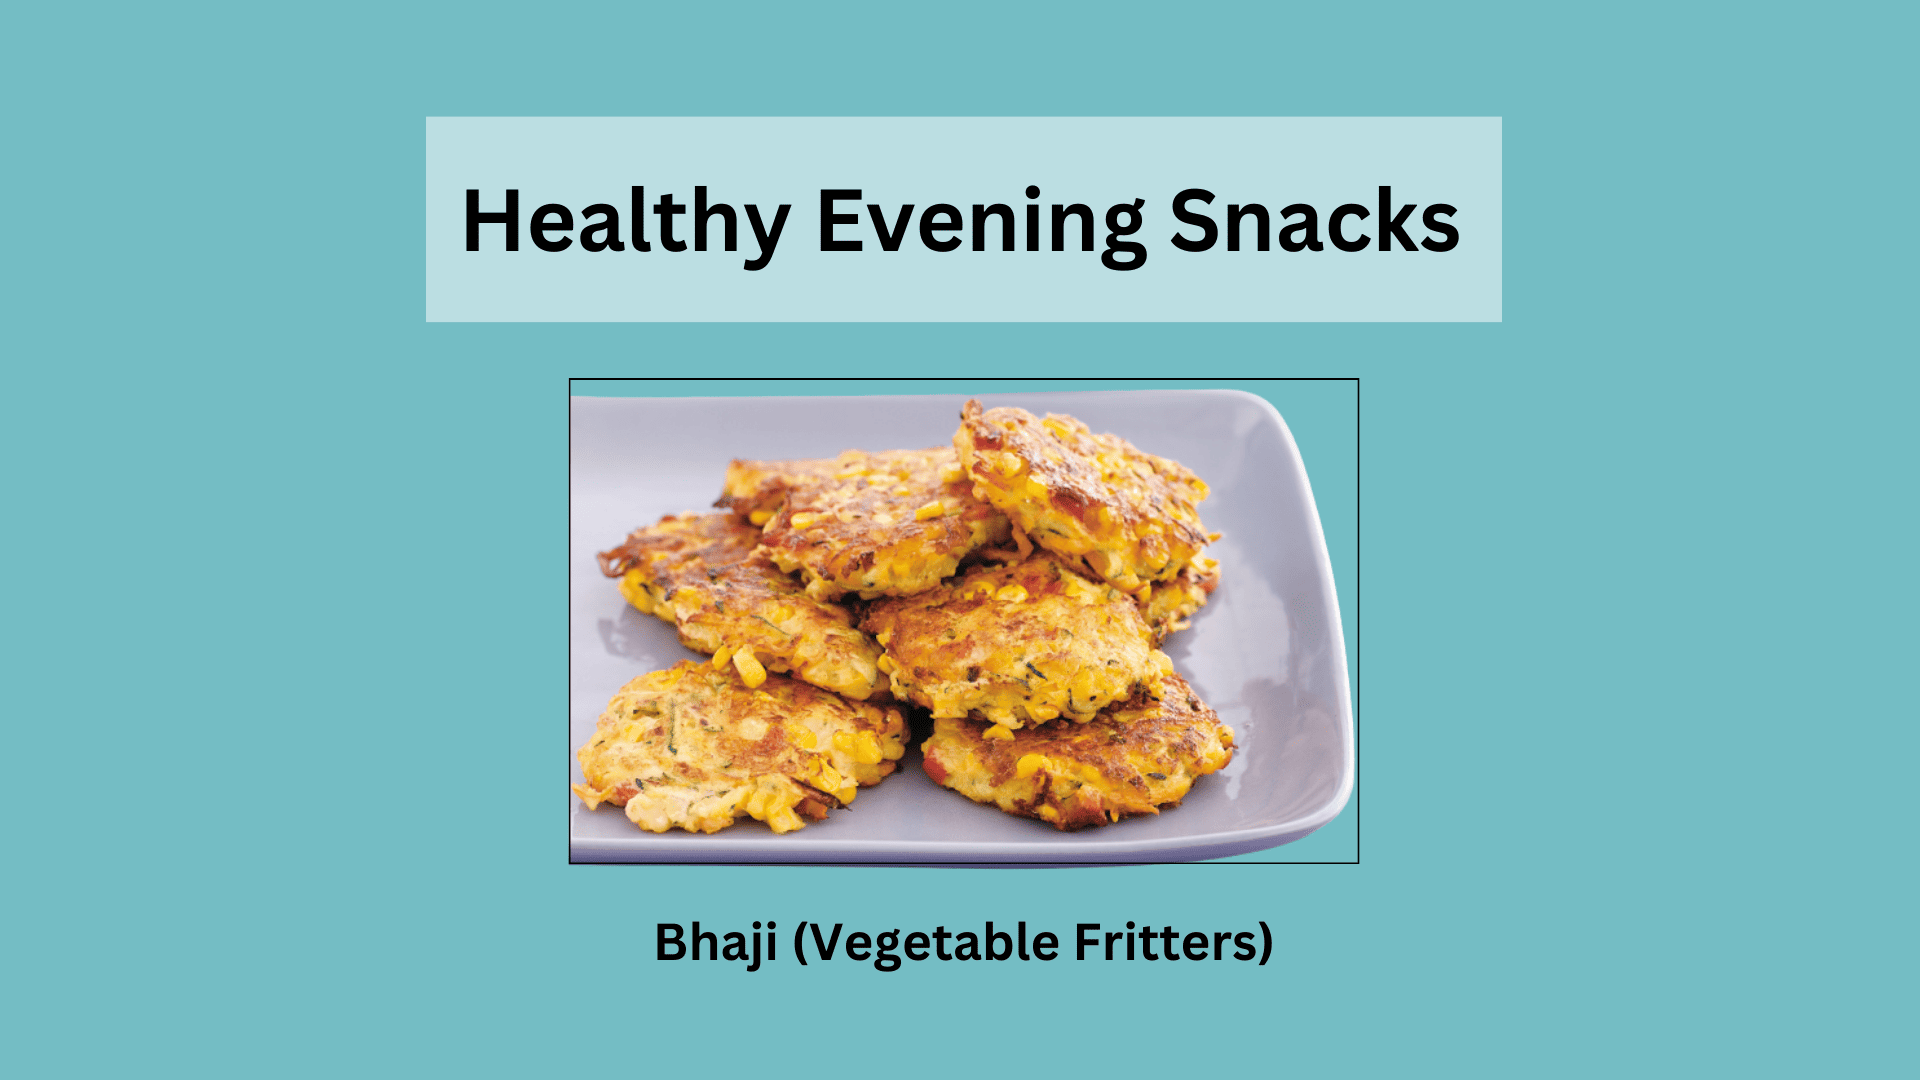 Bhaji (Vegetable Fritters)